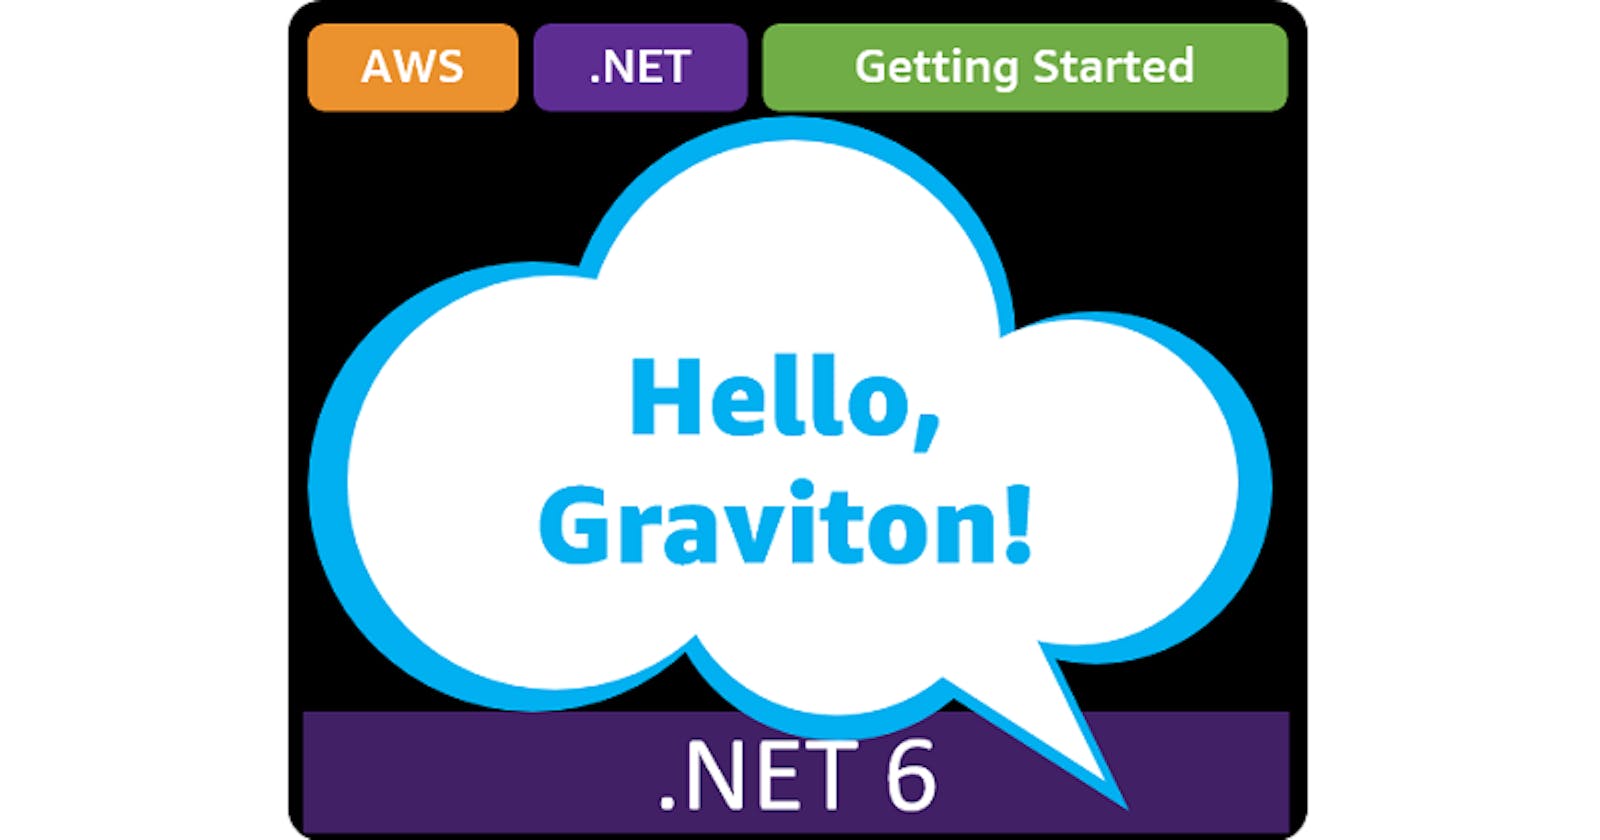 Hello, Graviton!